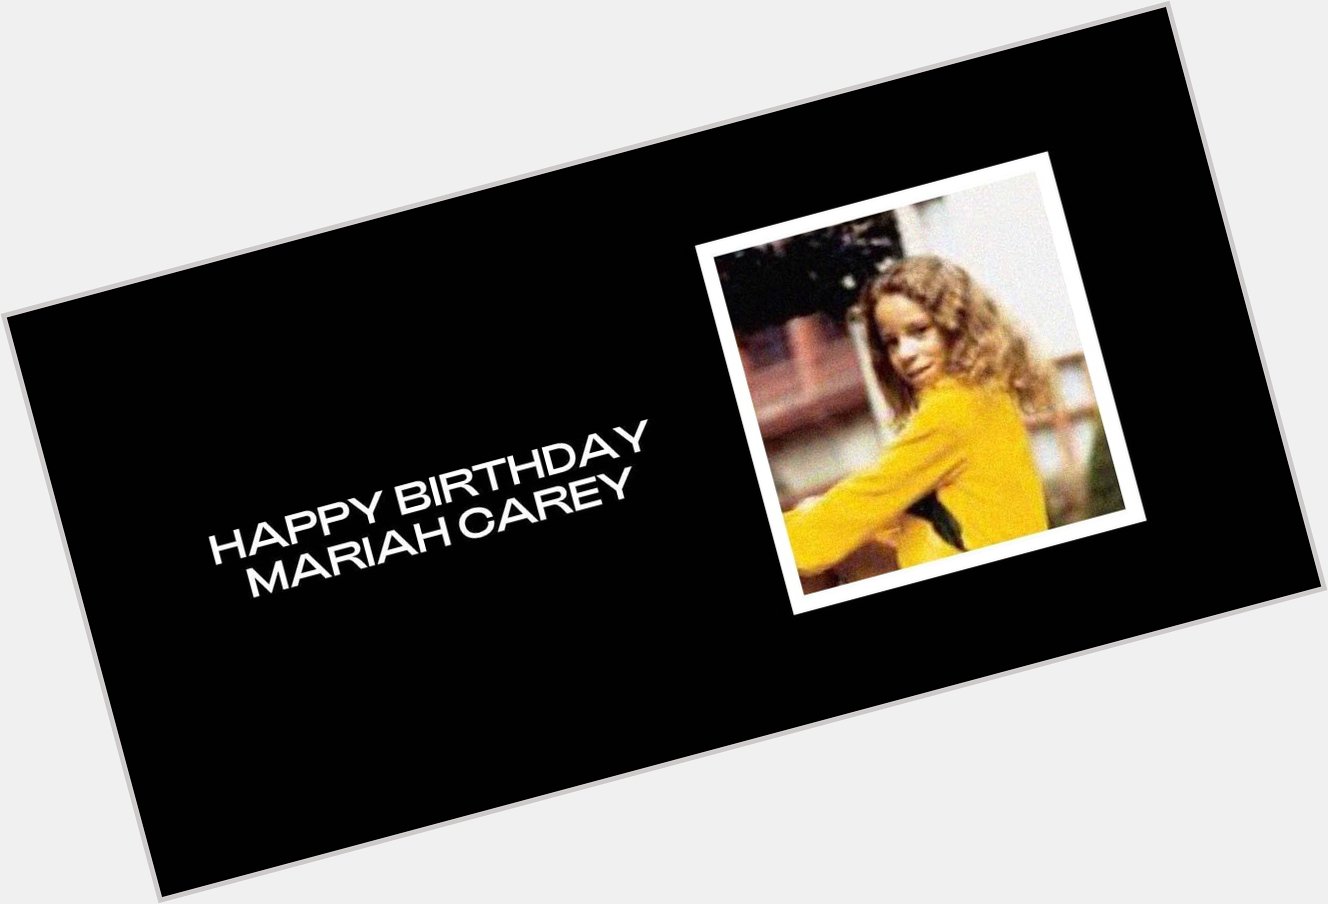 Beyoncé wishes Queen Mariah Carey a happy birthday via her website!   